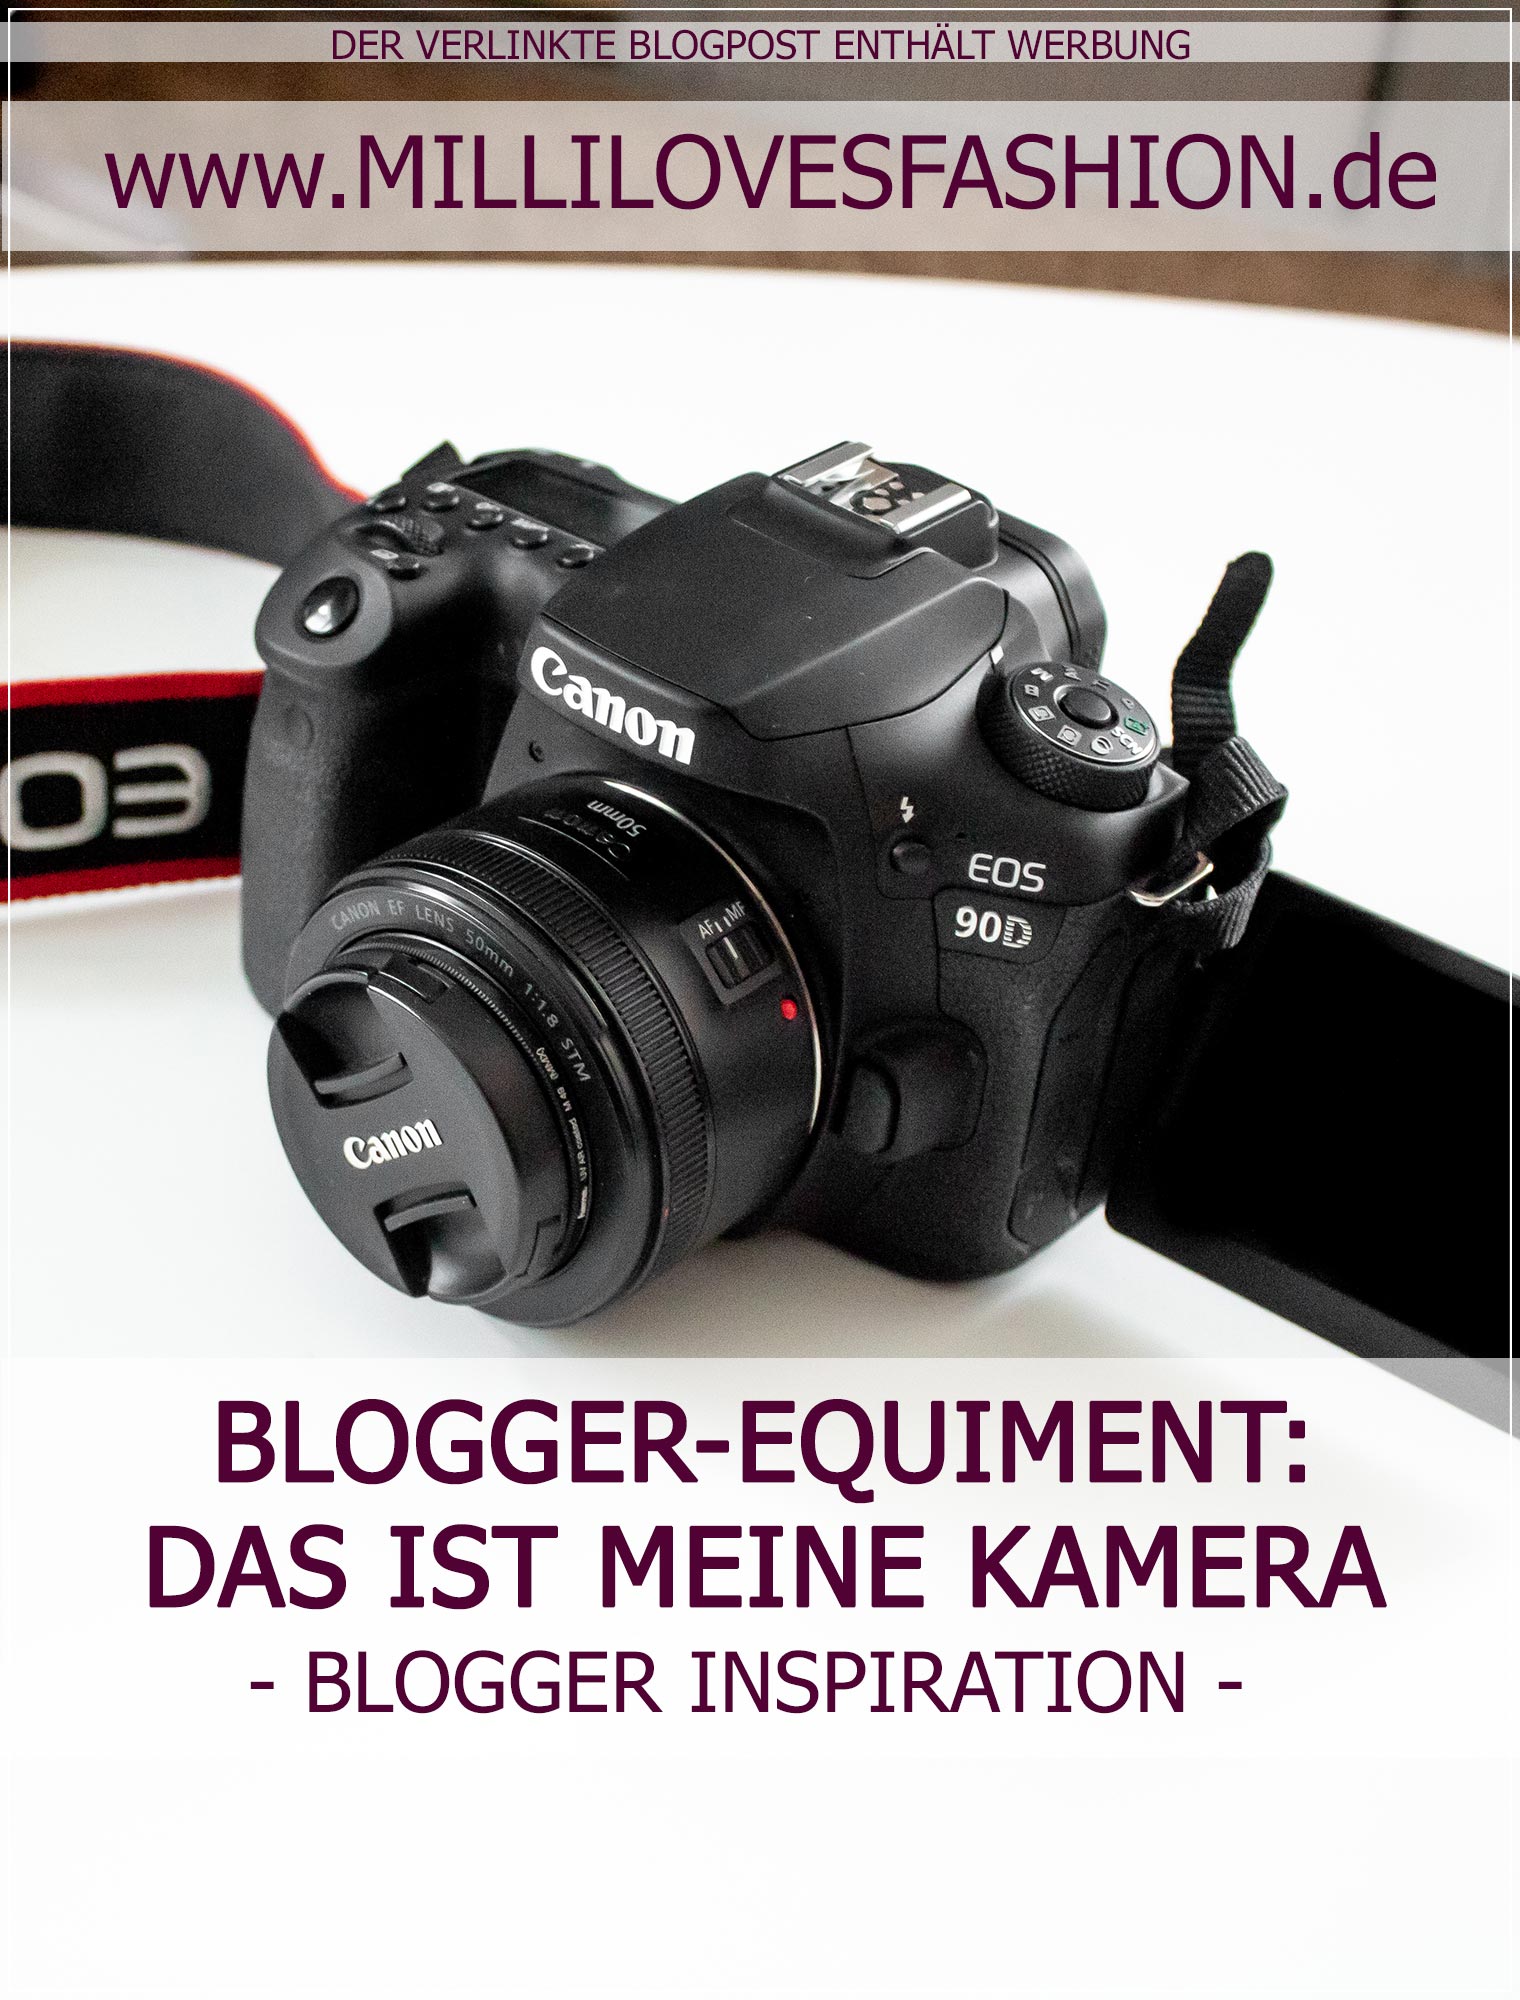 Bloggerequiment, Kamerareview meiner neuen Kamera Canon Eos90D